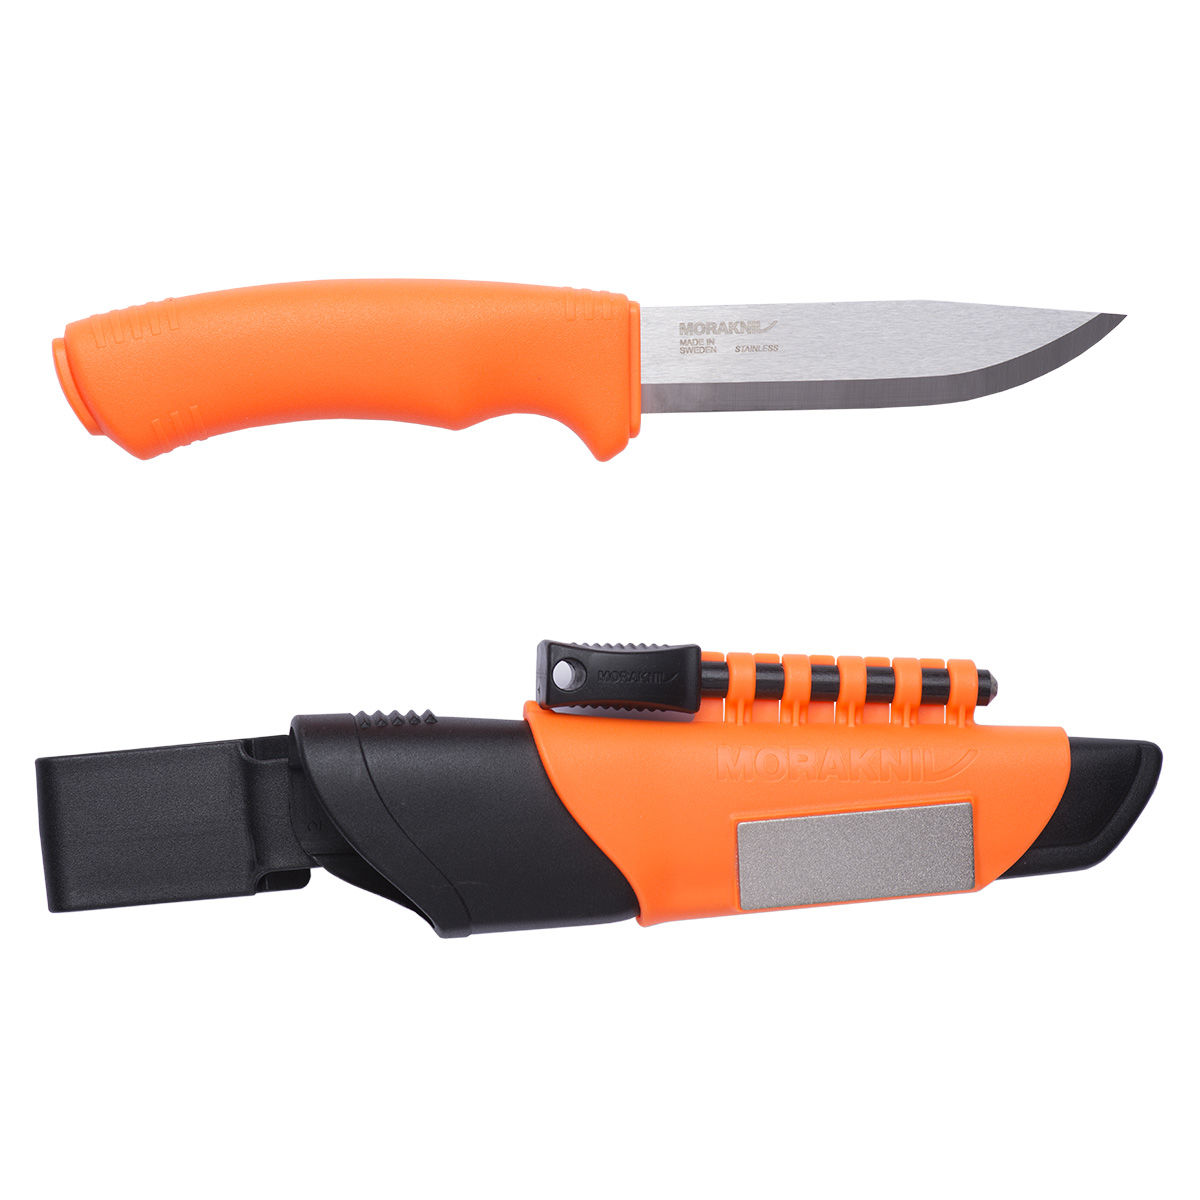 Mora Bushcraft Survival knife, fire starter and sharpener